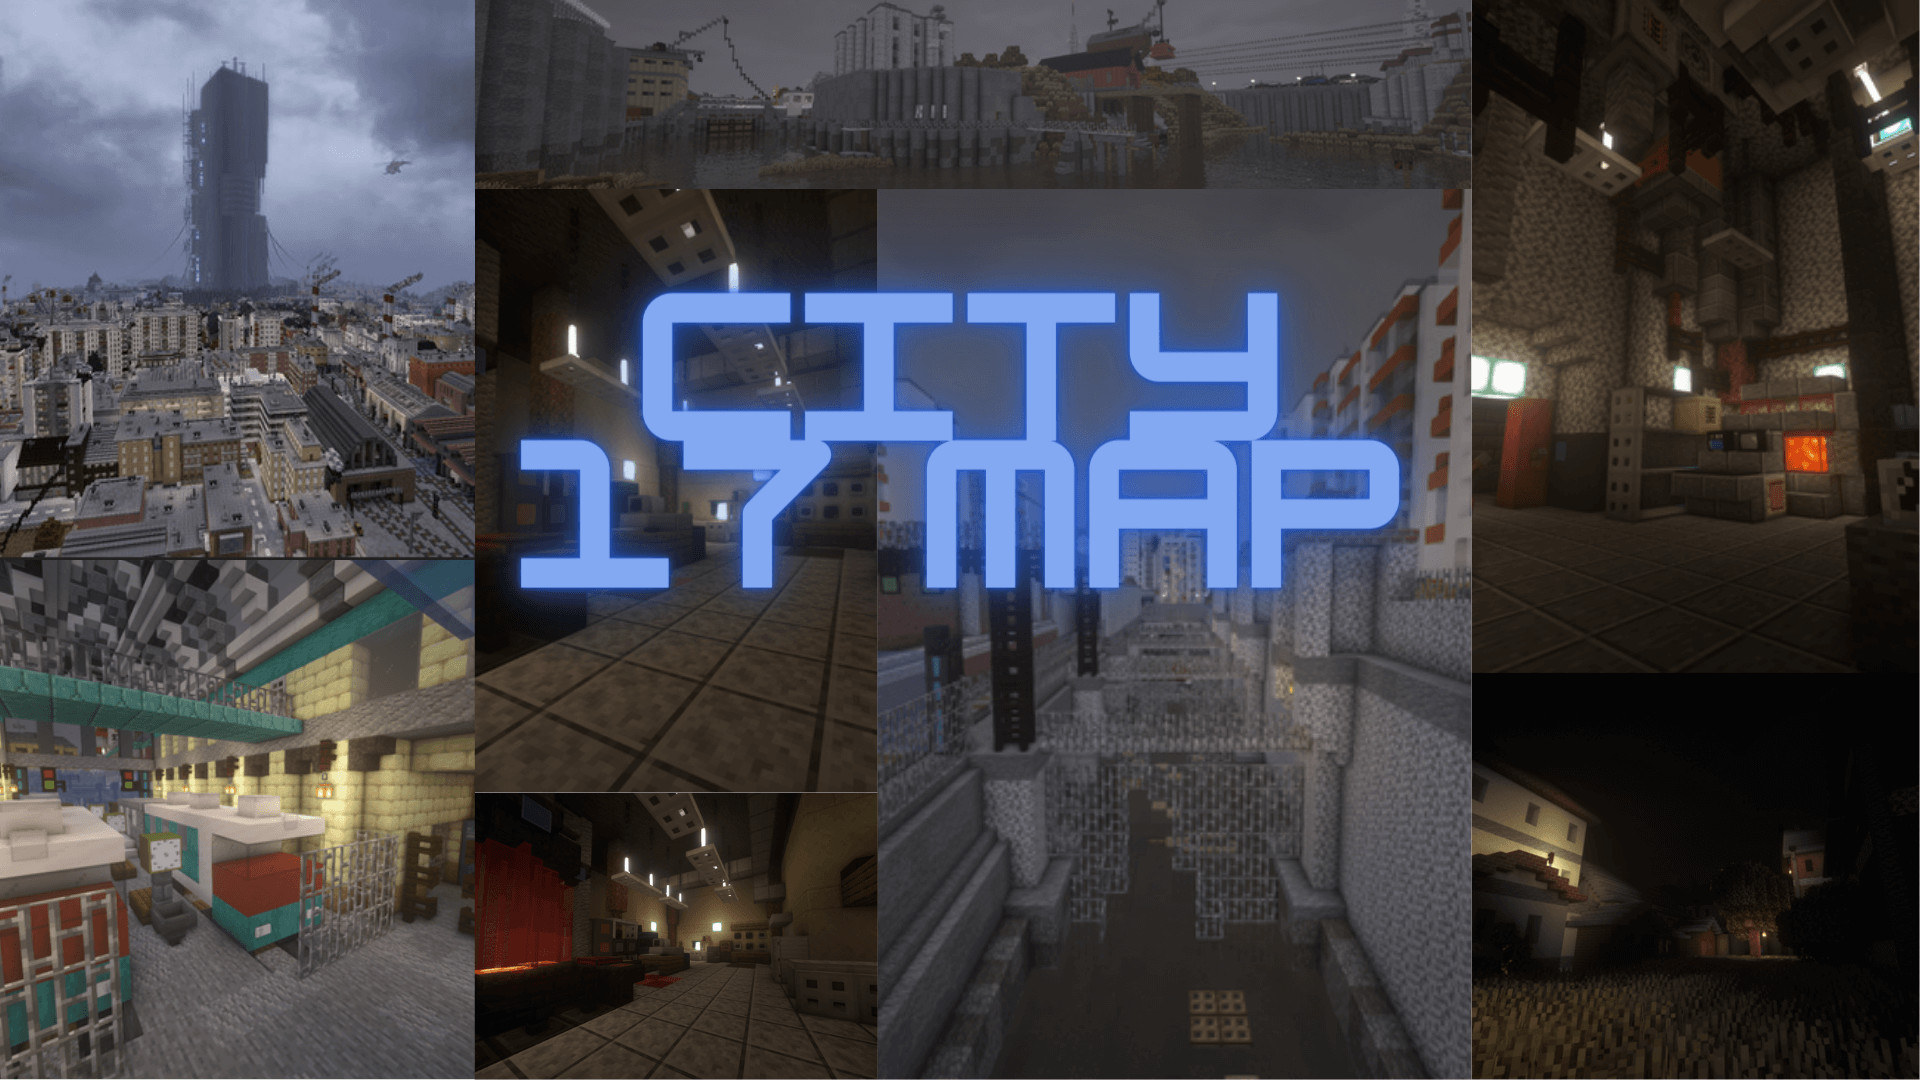 minecraft pe city maps 1.12.0